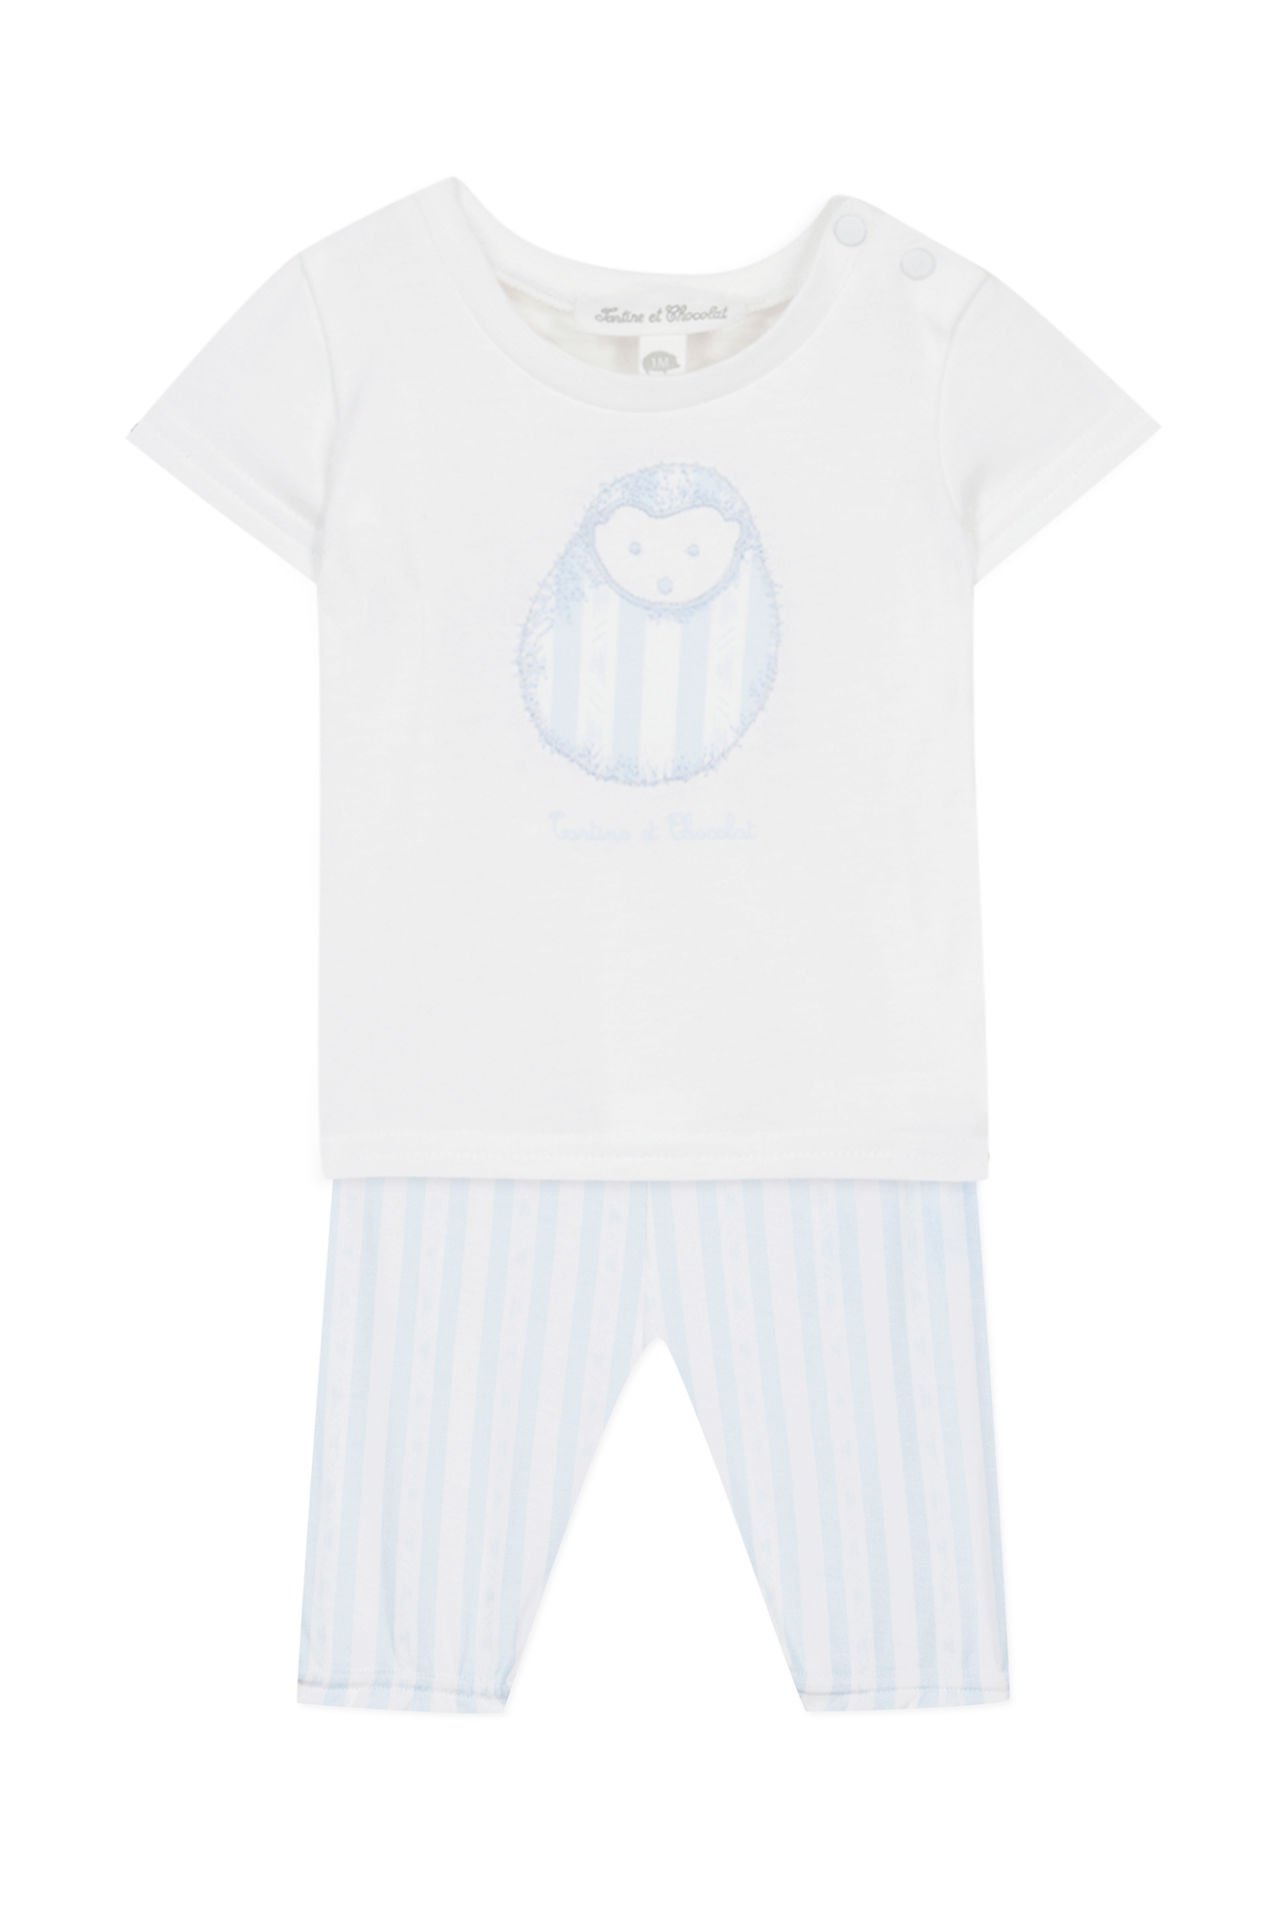 Erkek Bebek T-Shirt + Pantalon Set